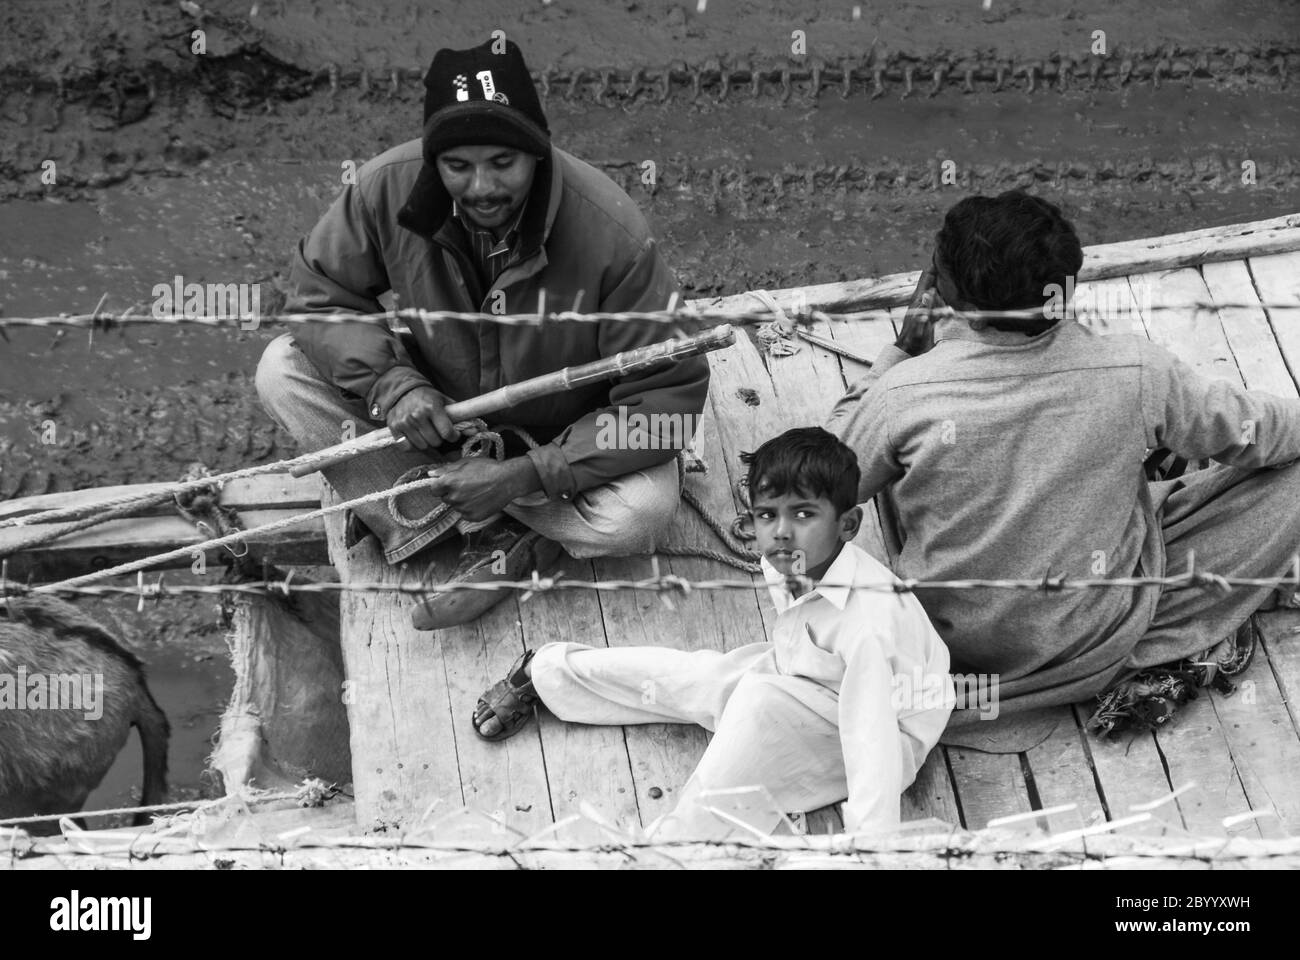 Lahore, Pakistan. 27th January 2013. Stock Photo